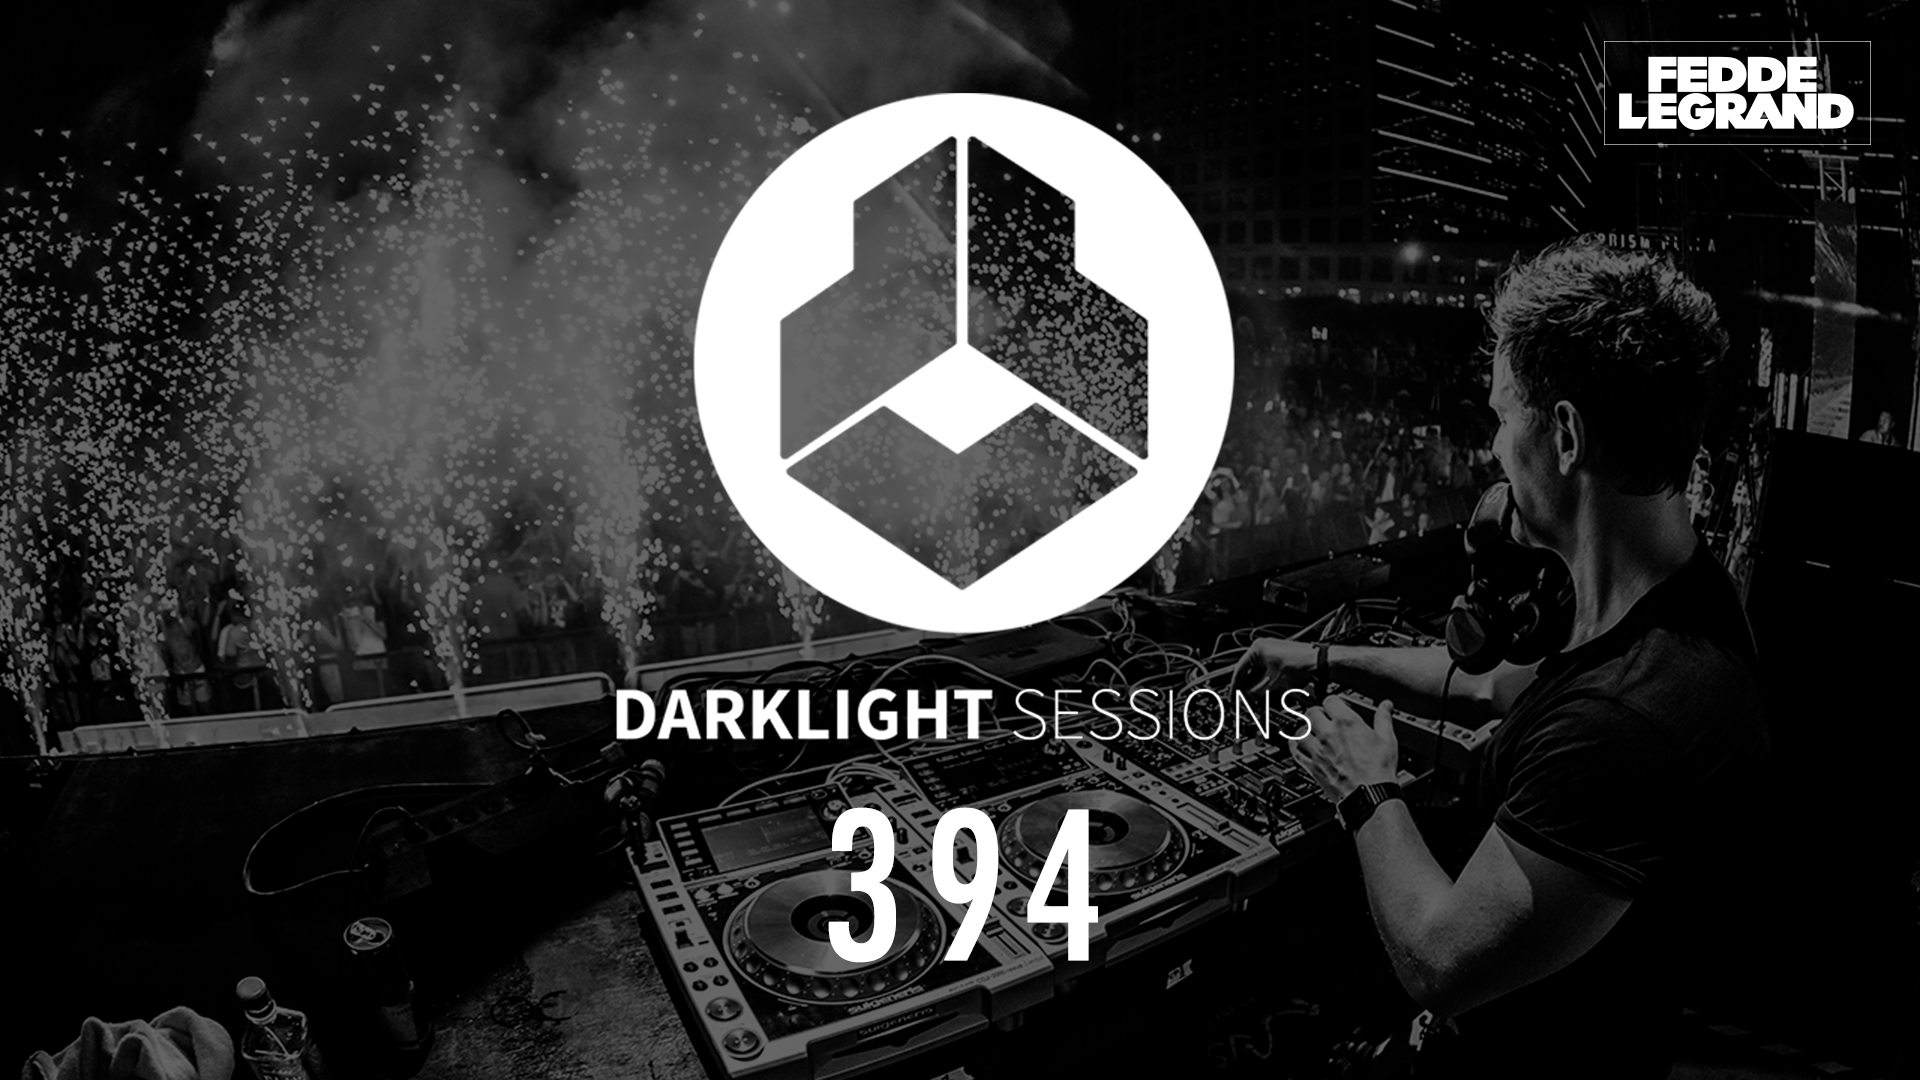 Darklight Sessions 394